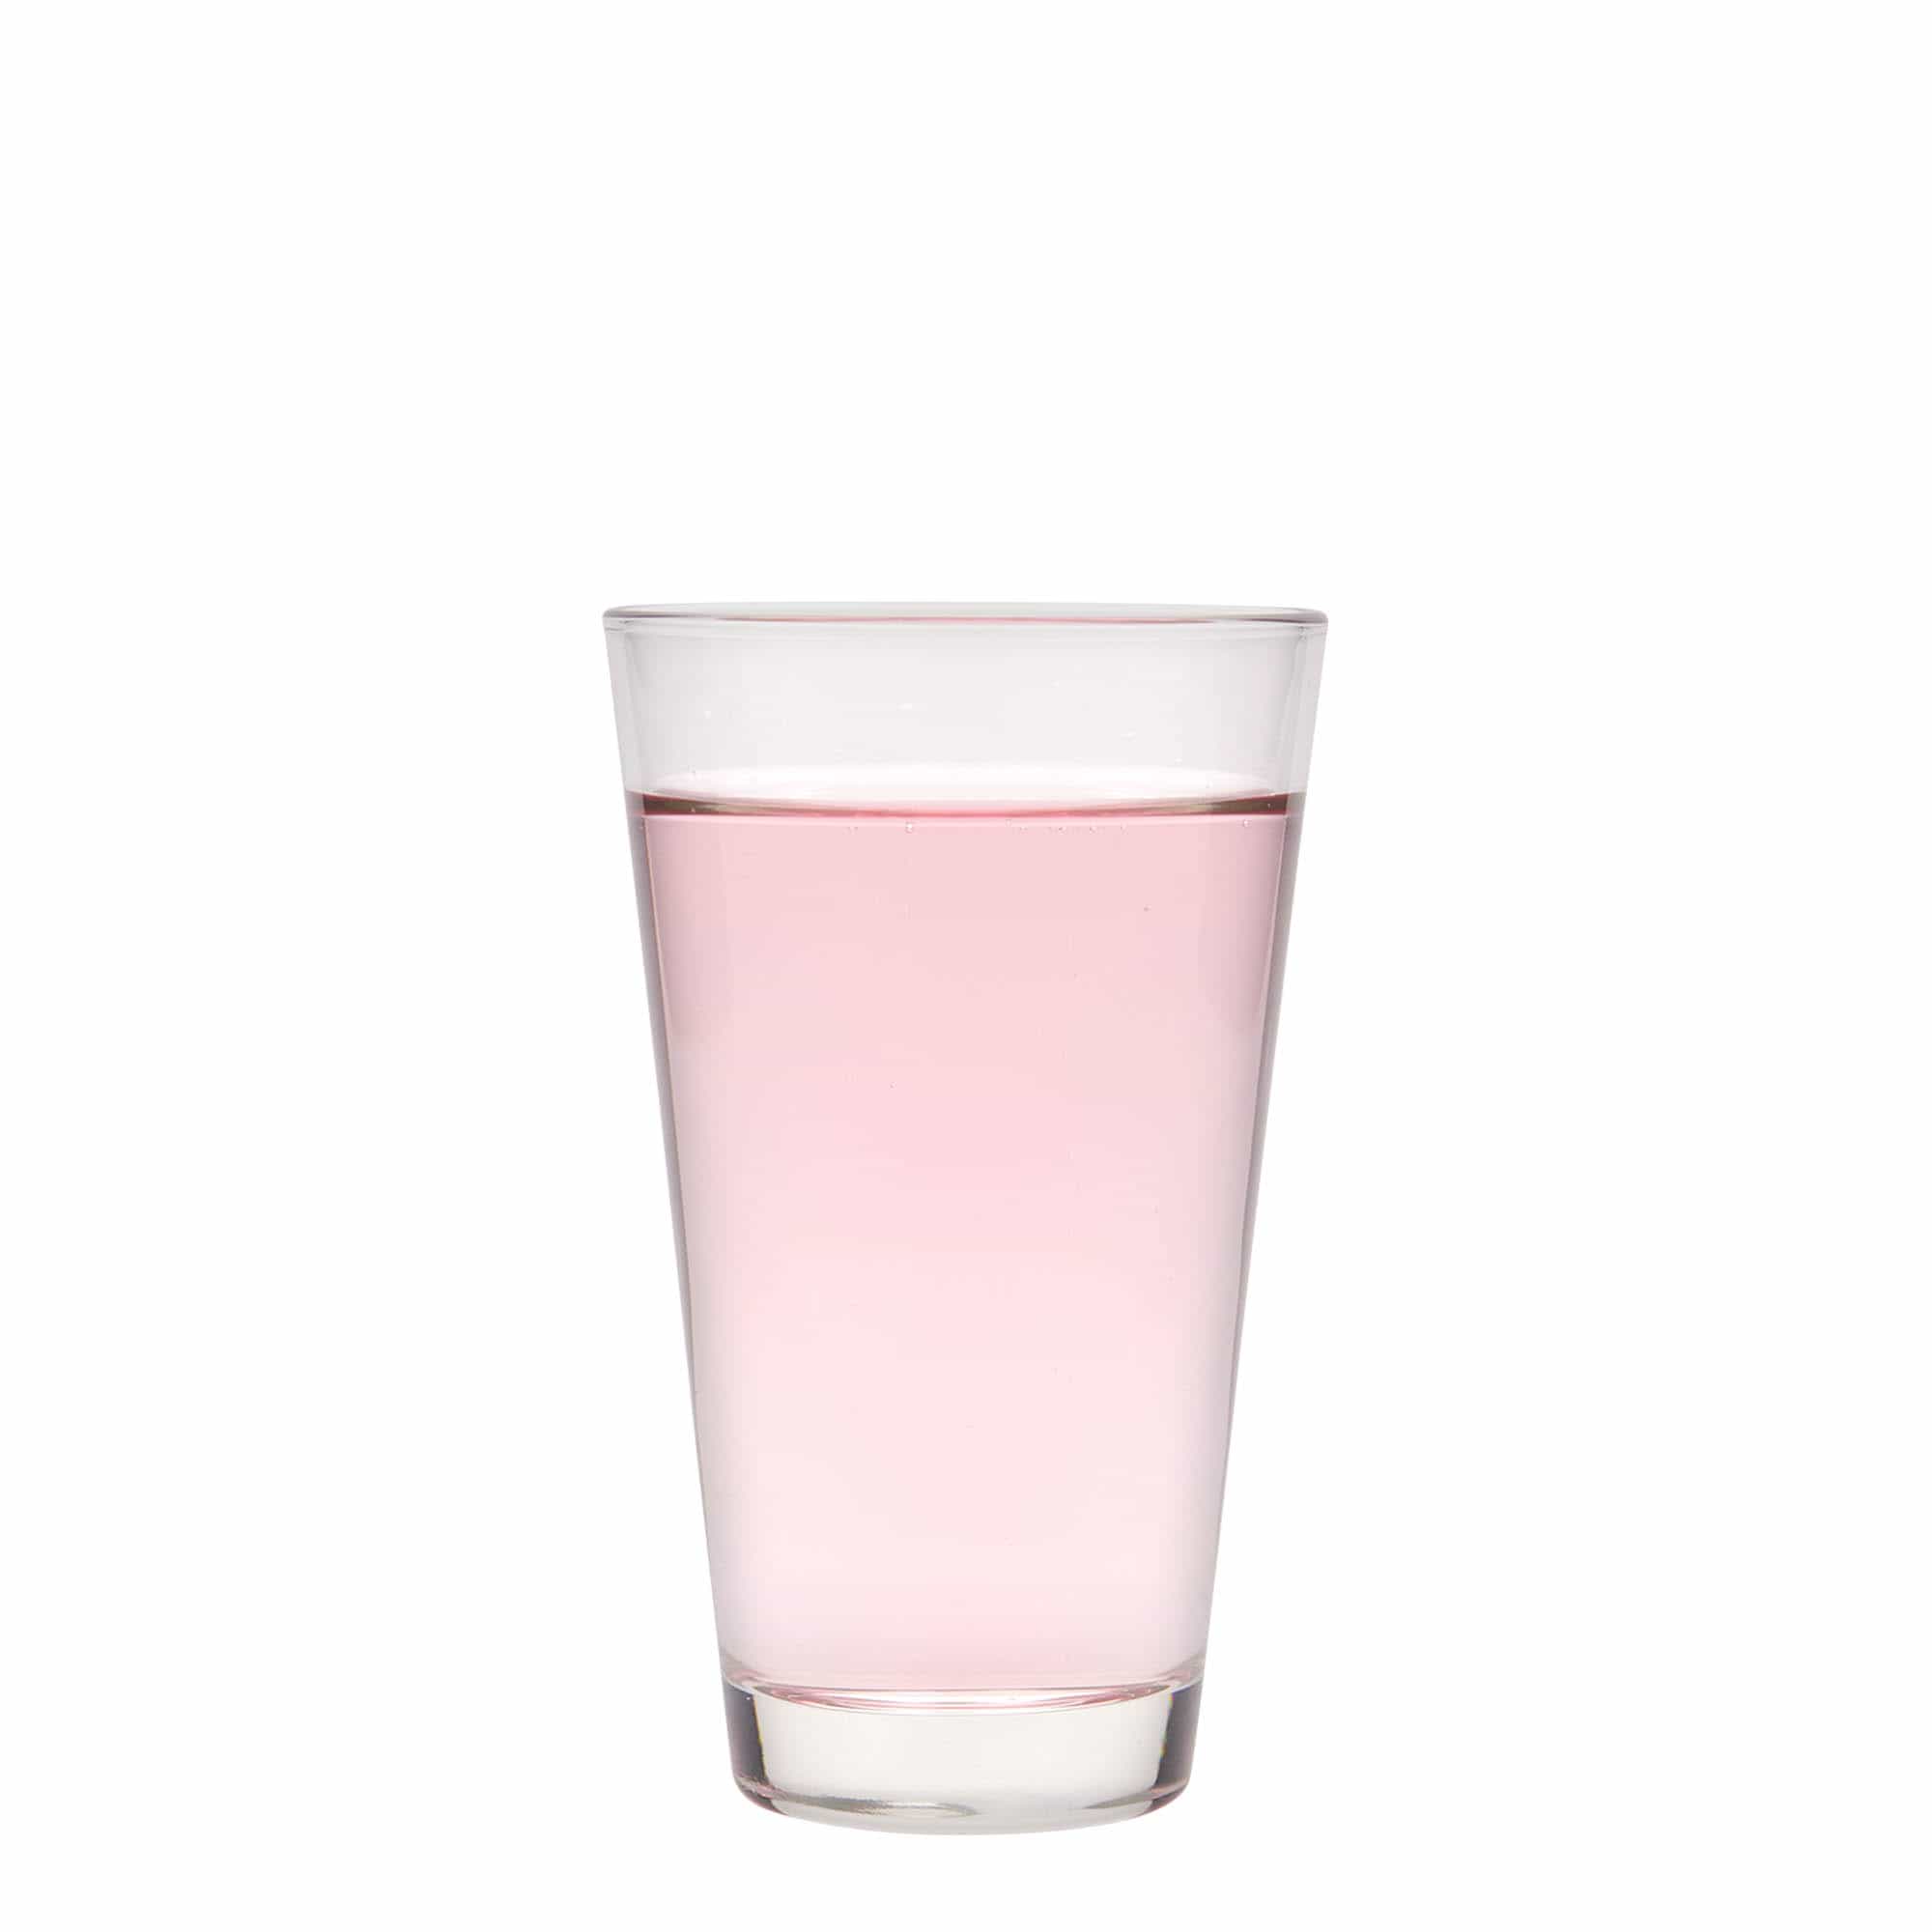 Drinkglas 'Conic', 250 ml, glas